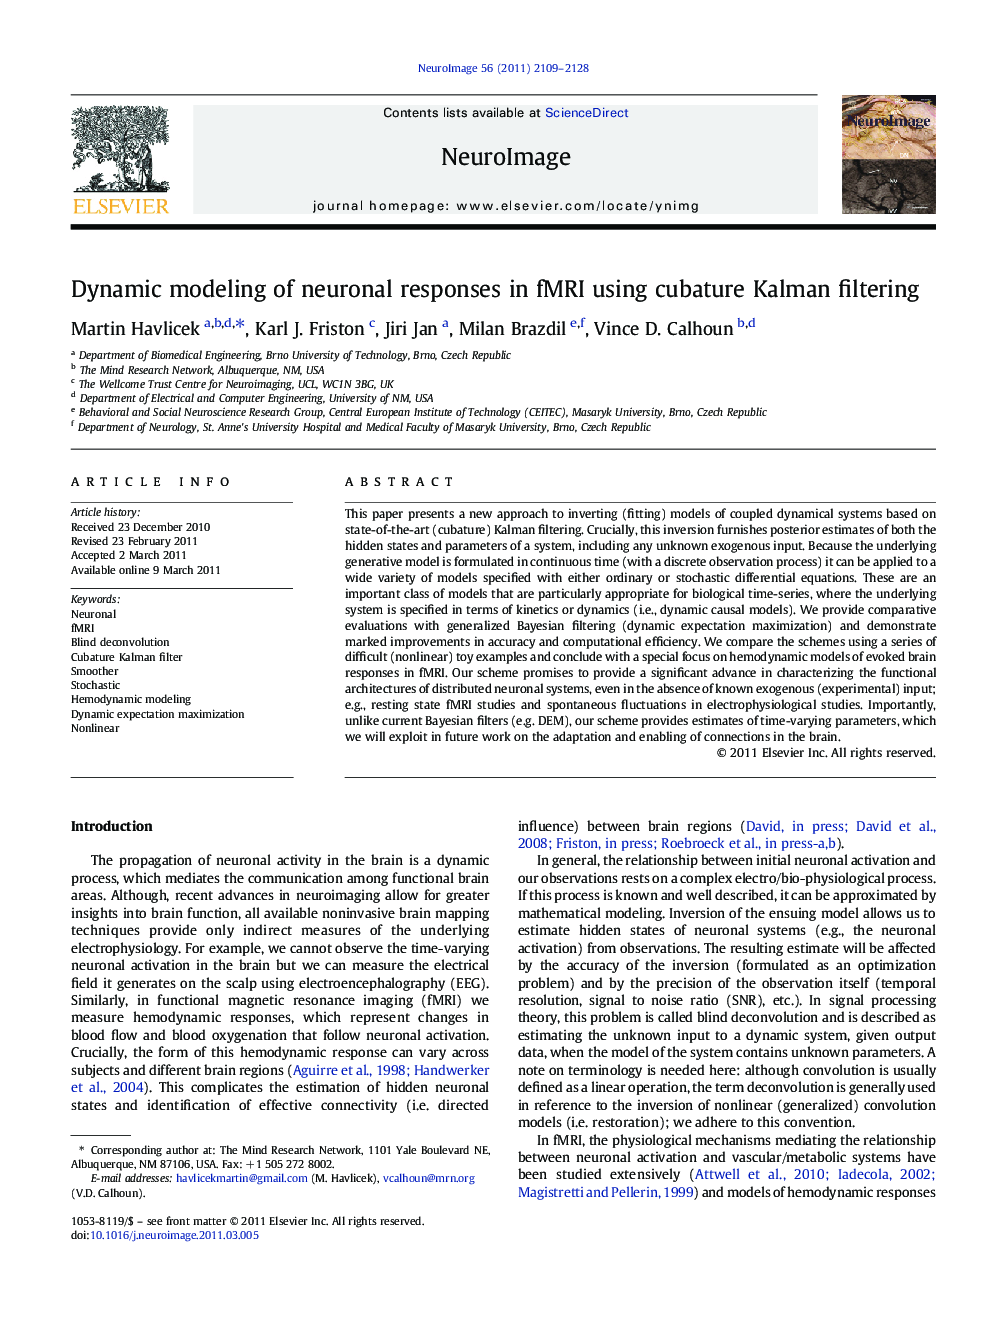 Dynamic modeling of neuronal responses in fMRI using cubature Kalman filtering